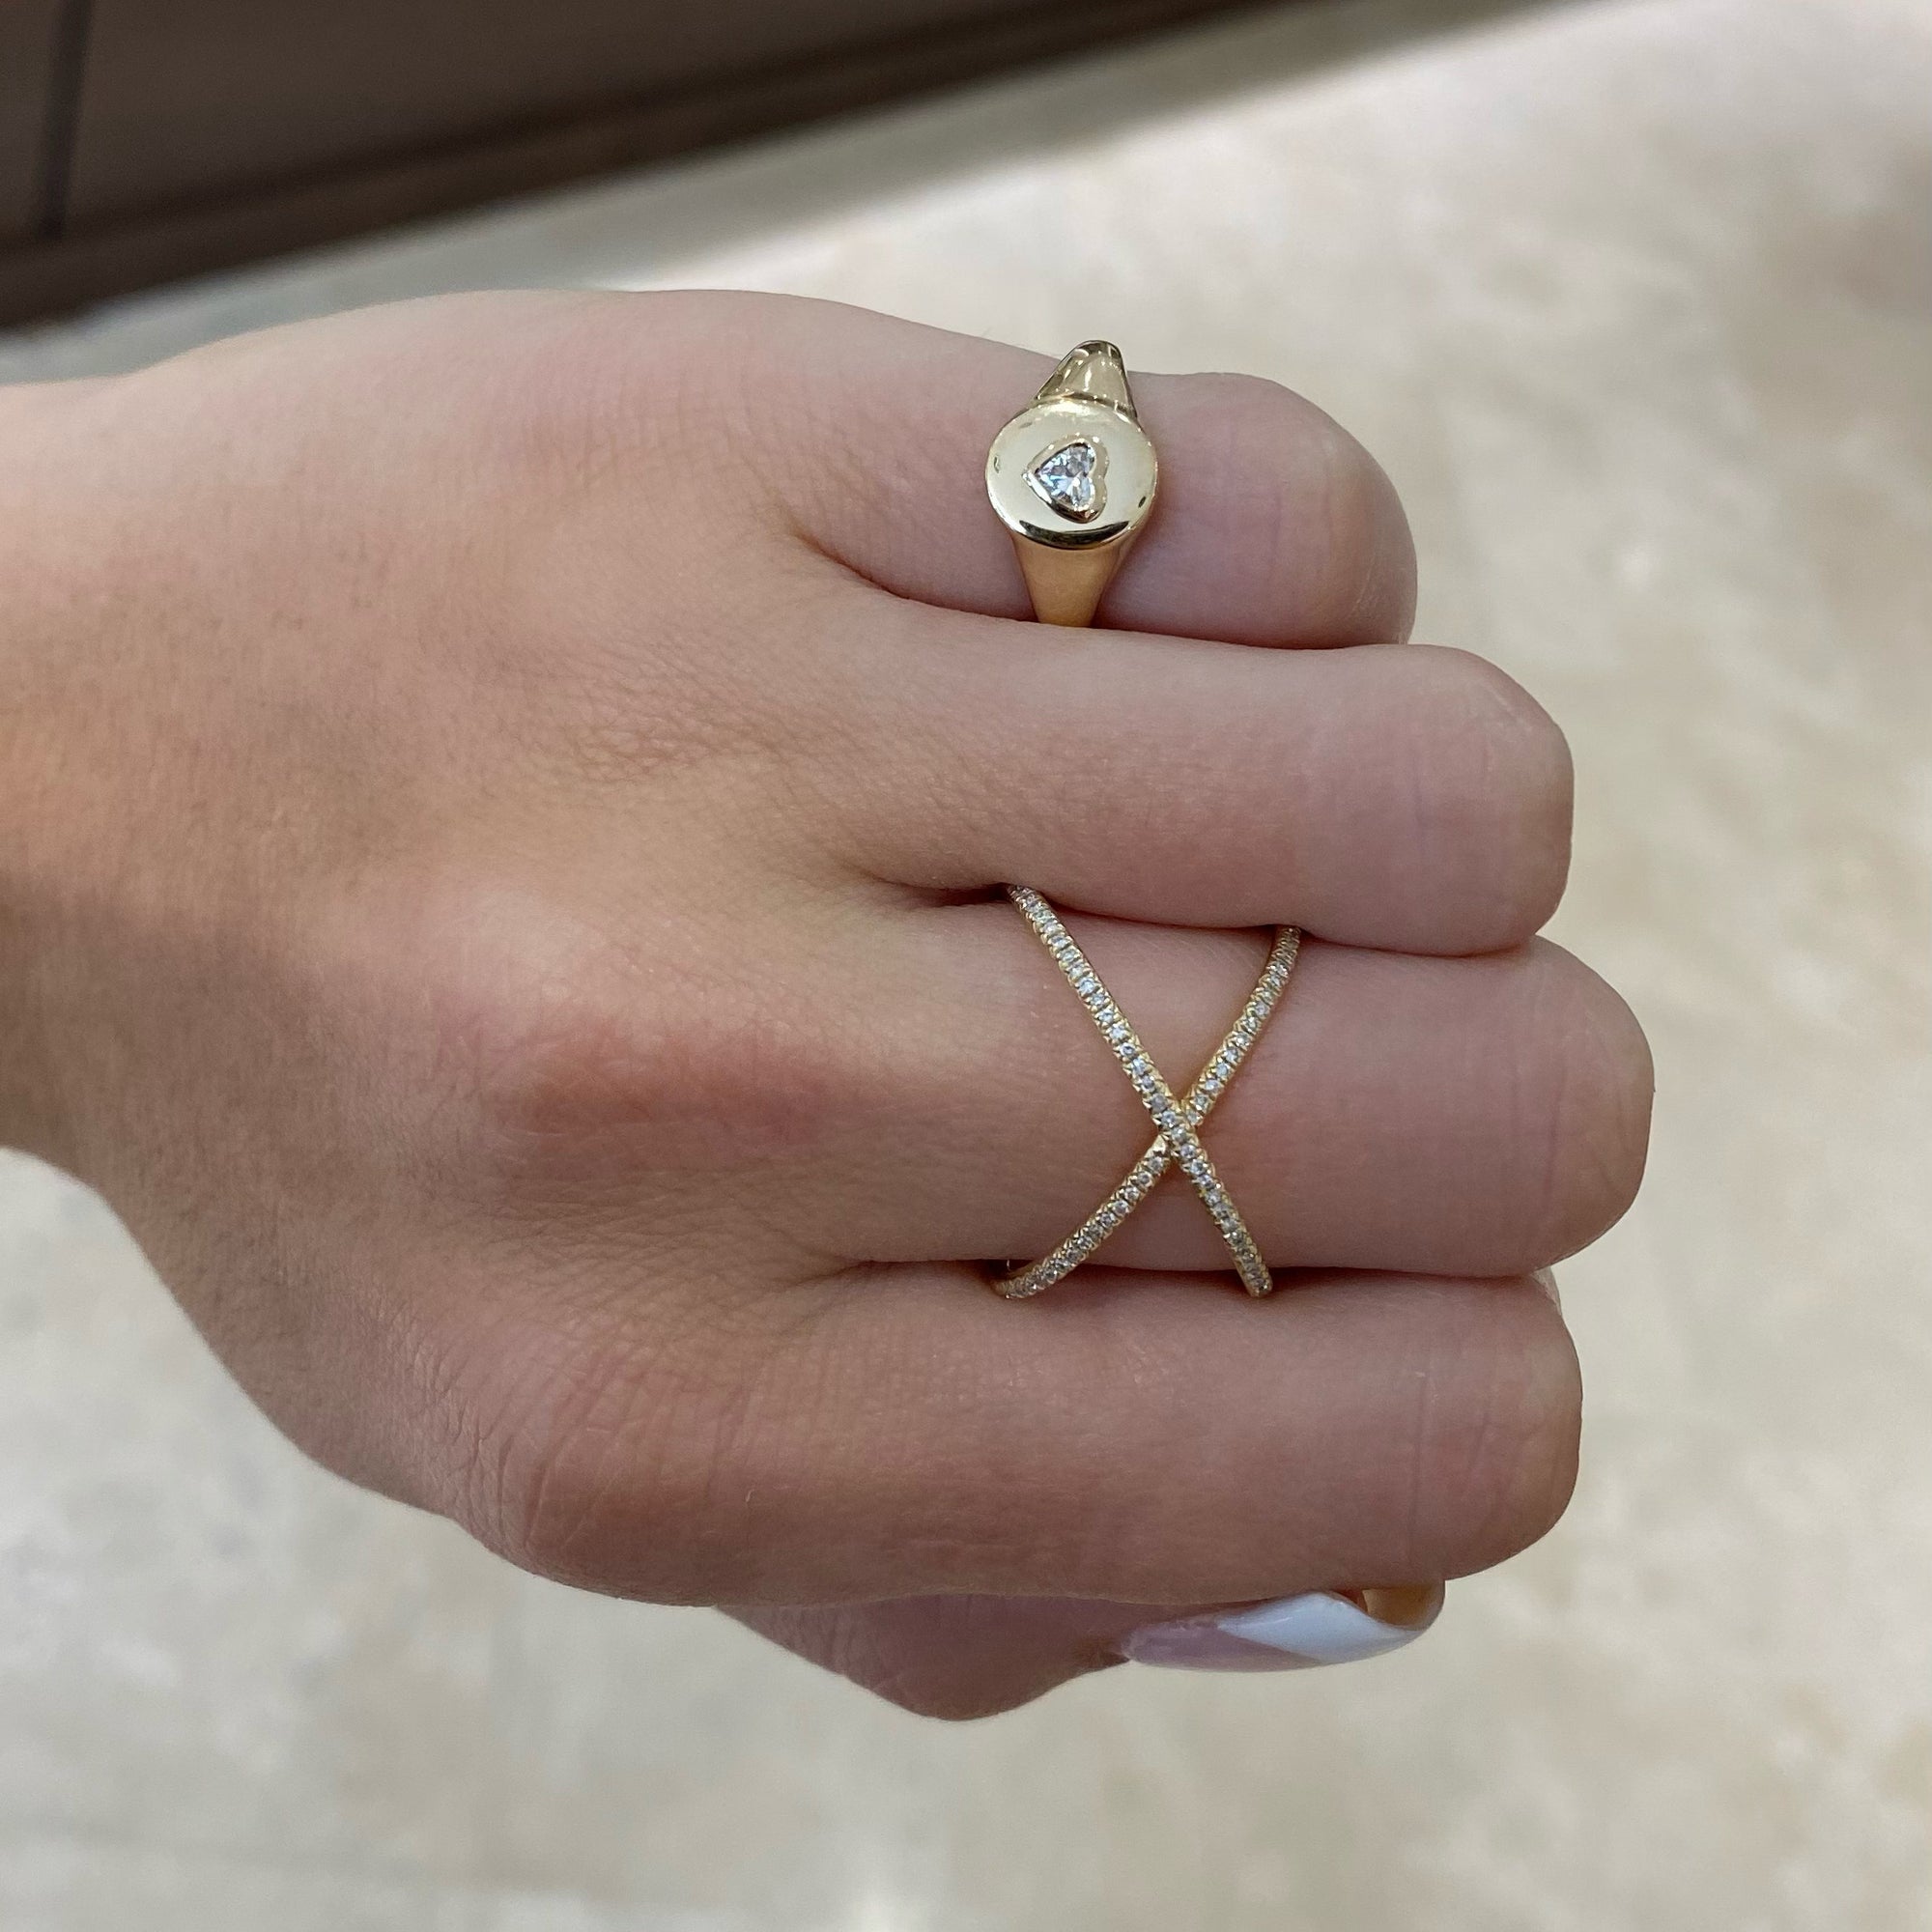 Diamond Heart Signet Ring  - 14K gold weighing 2.68 grams  - 0.15 ct heart-shaped diamond